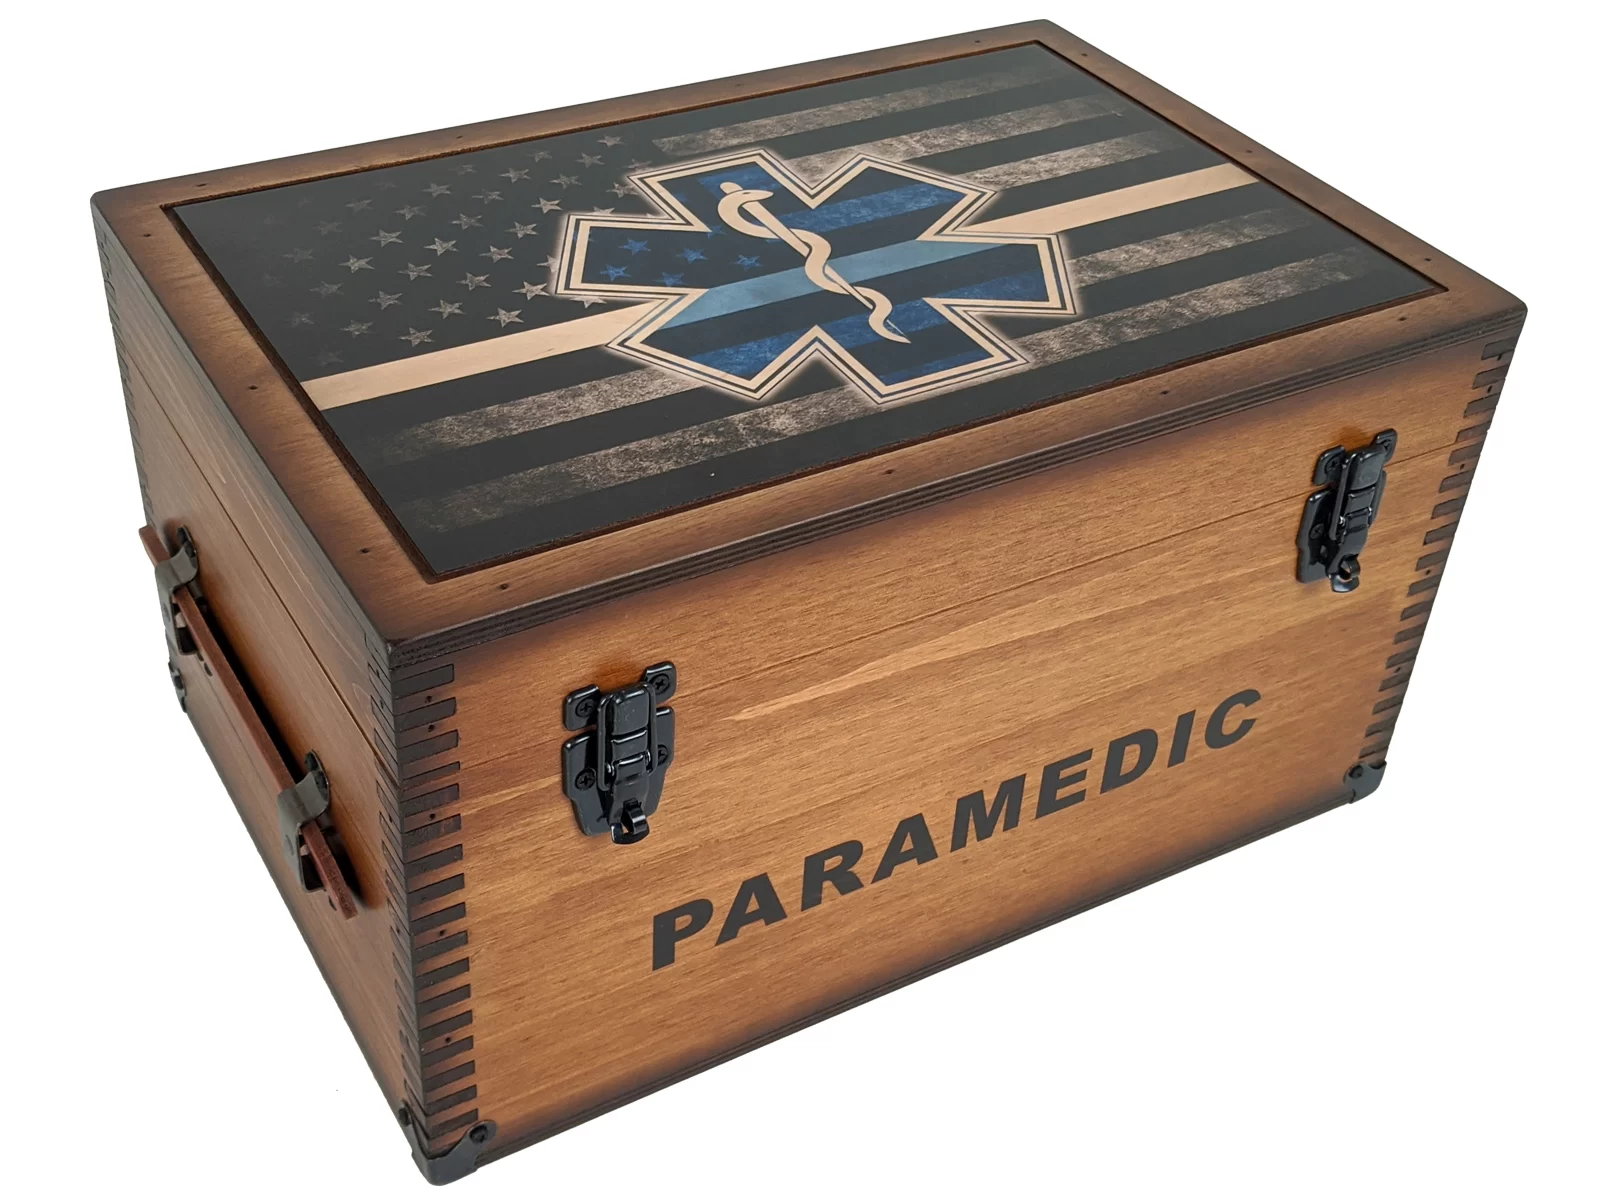 Paramedic Star of Life Keepsake Box - Relic Wood